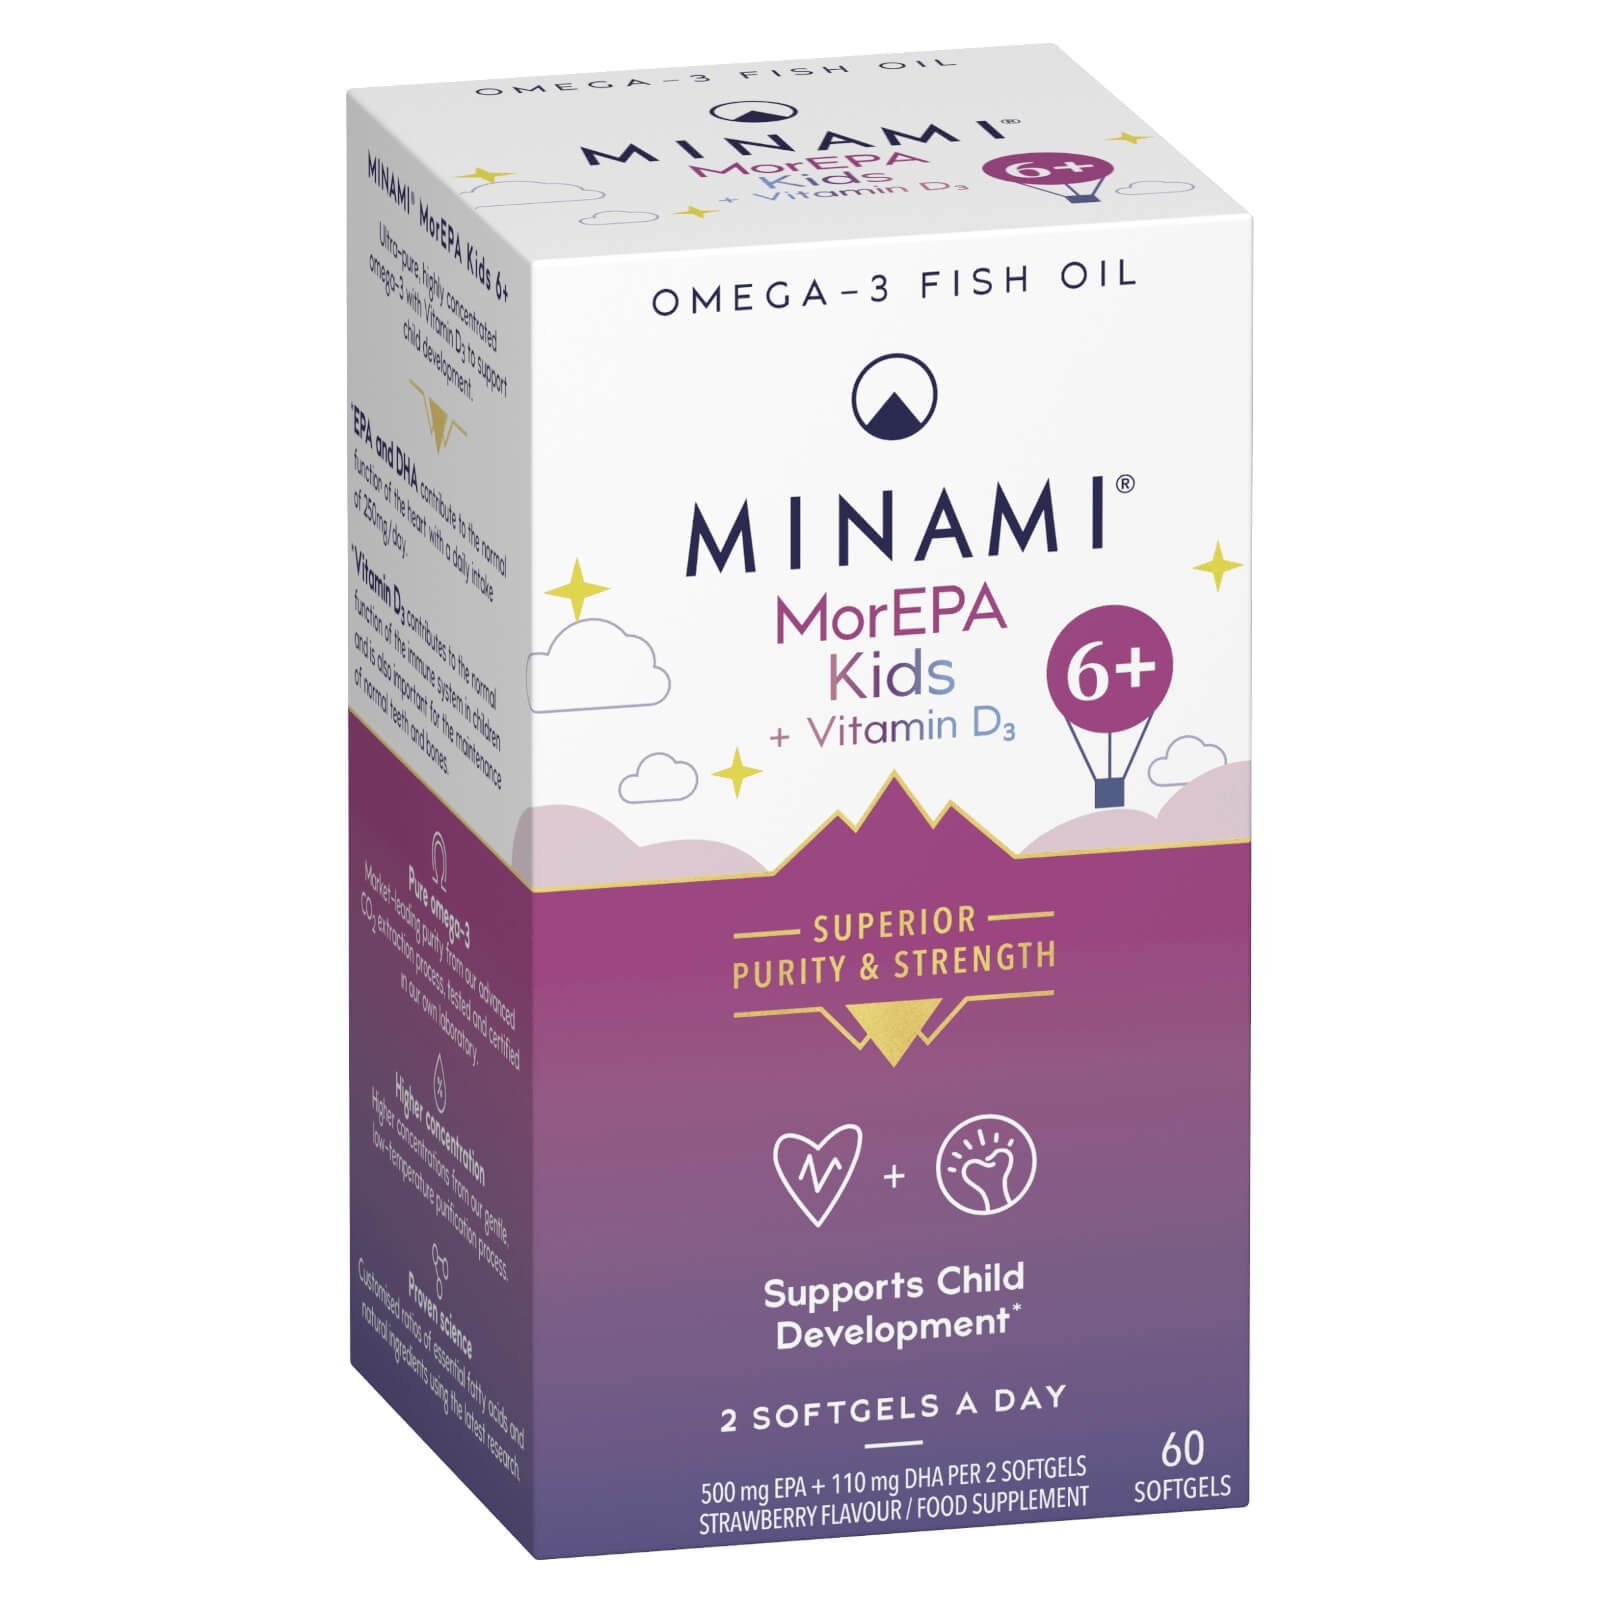 MINAMI MorEPA Kids + Vitamin D3 6+  60 Softgels